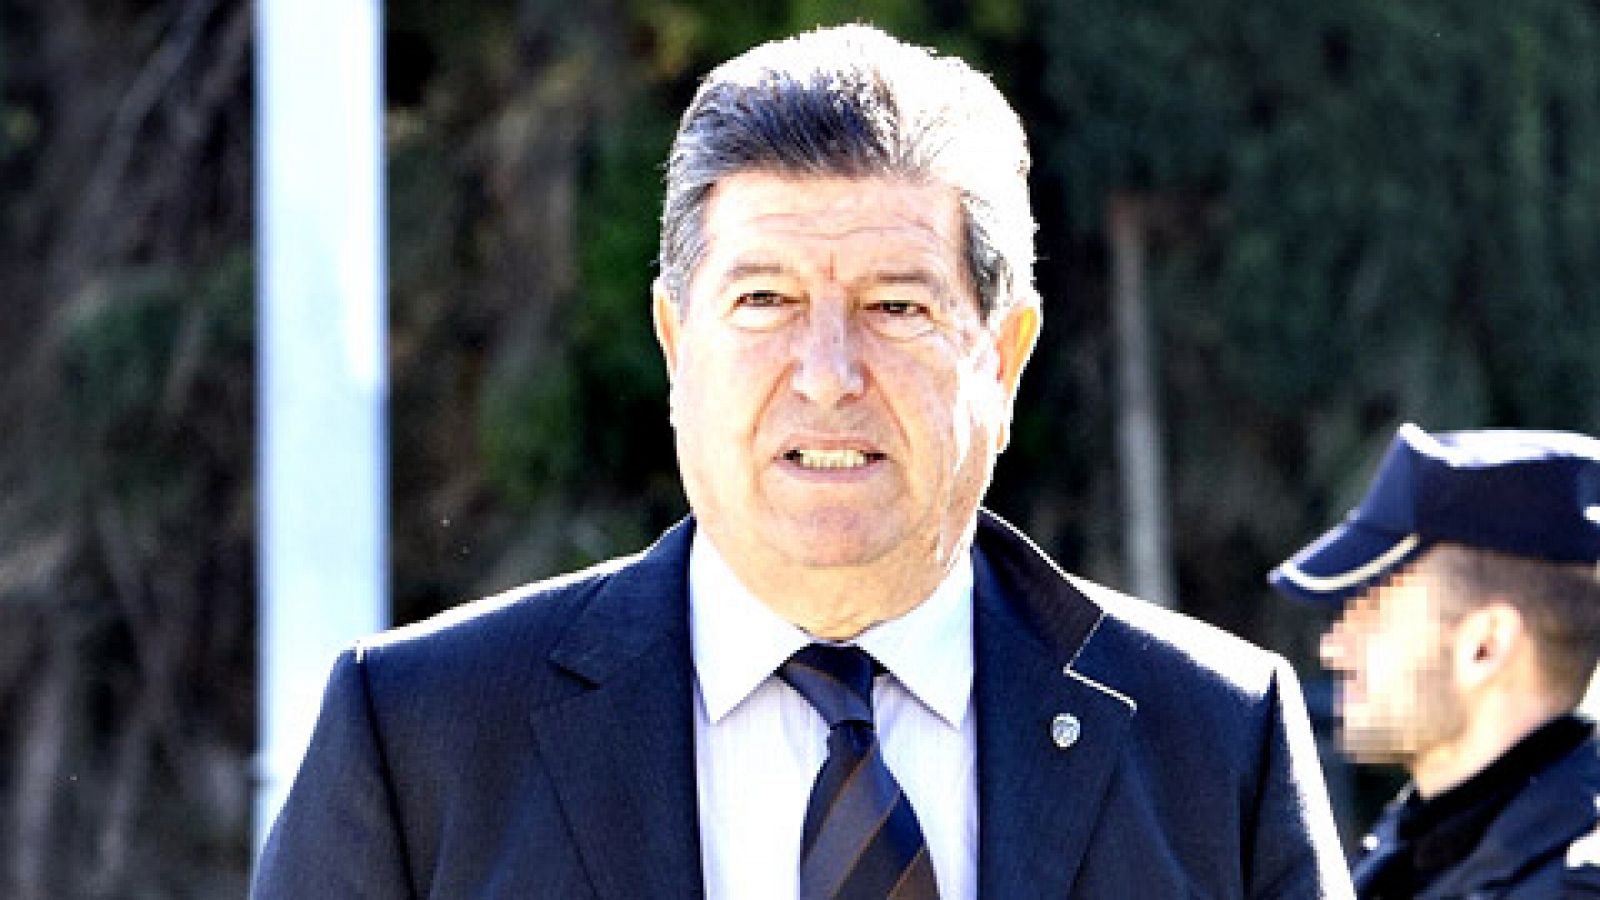 Telediario 1: Muere el expresidente del Valencia CF Jaume OrtMuere el expresidente del Valencia CF Jaume Ortí | RTVE Play